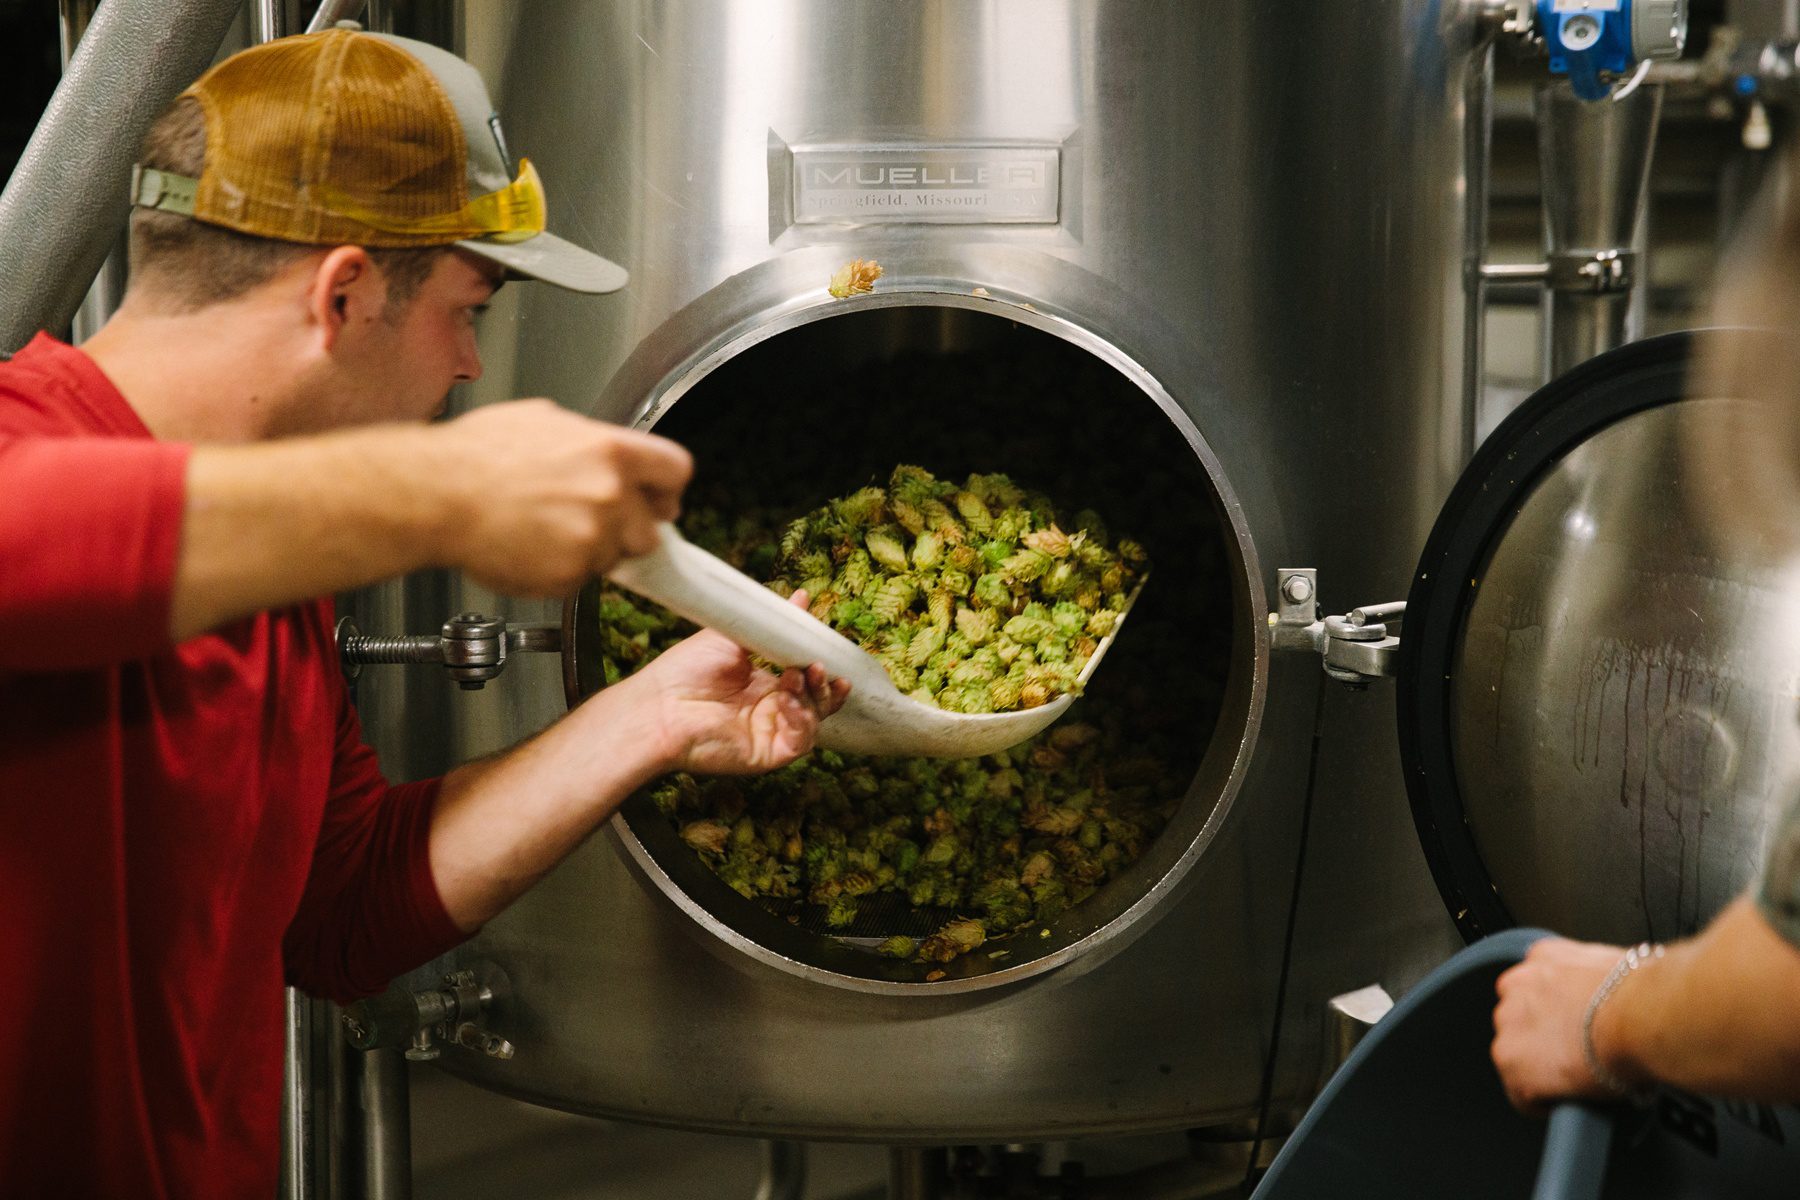 Sierra Nevada brewer adding hops during brewing